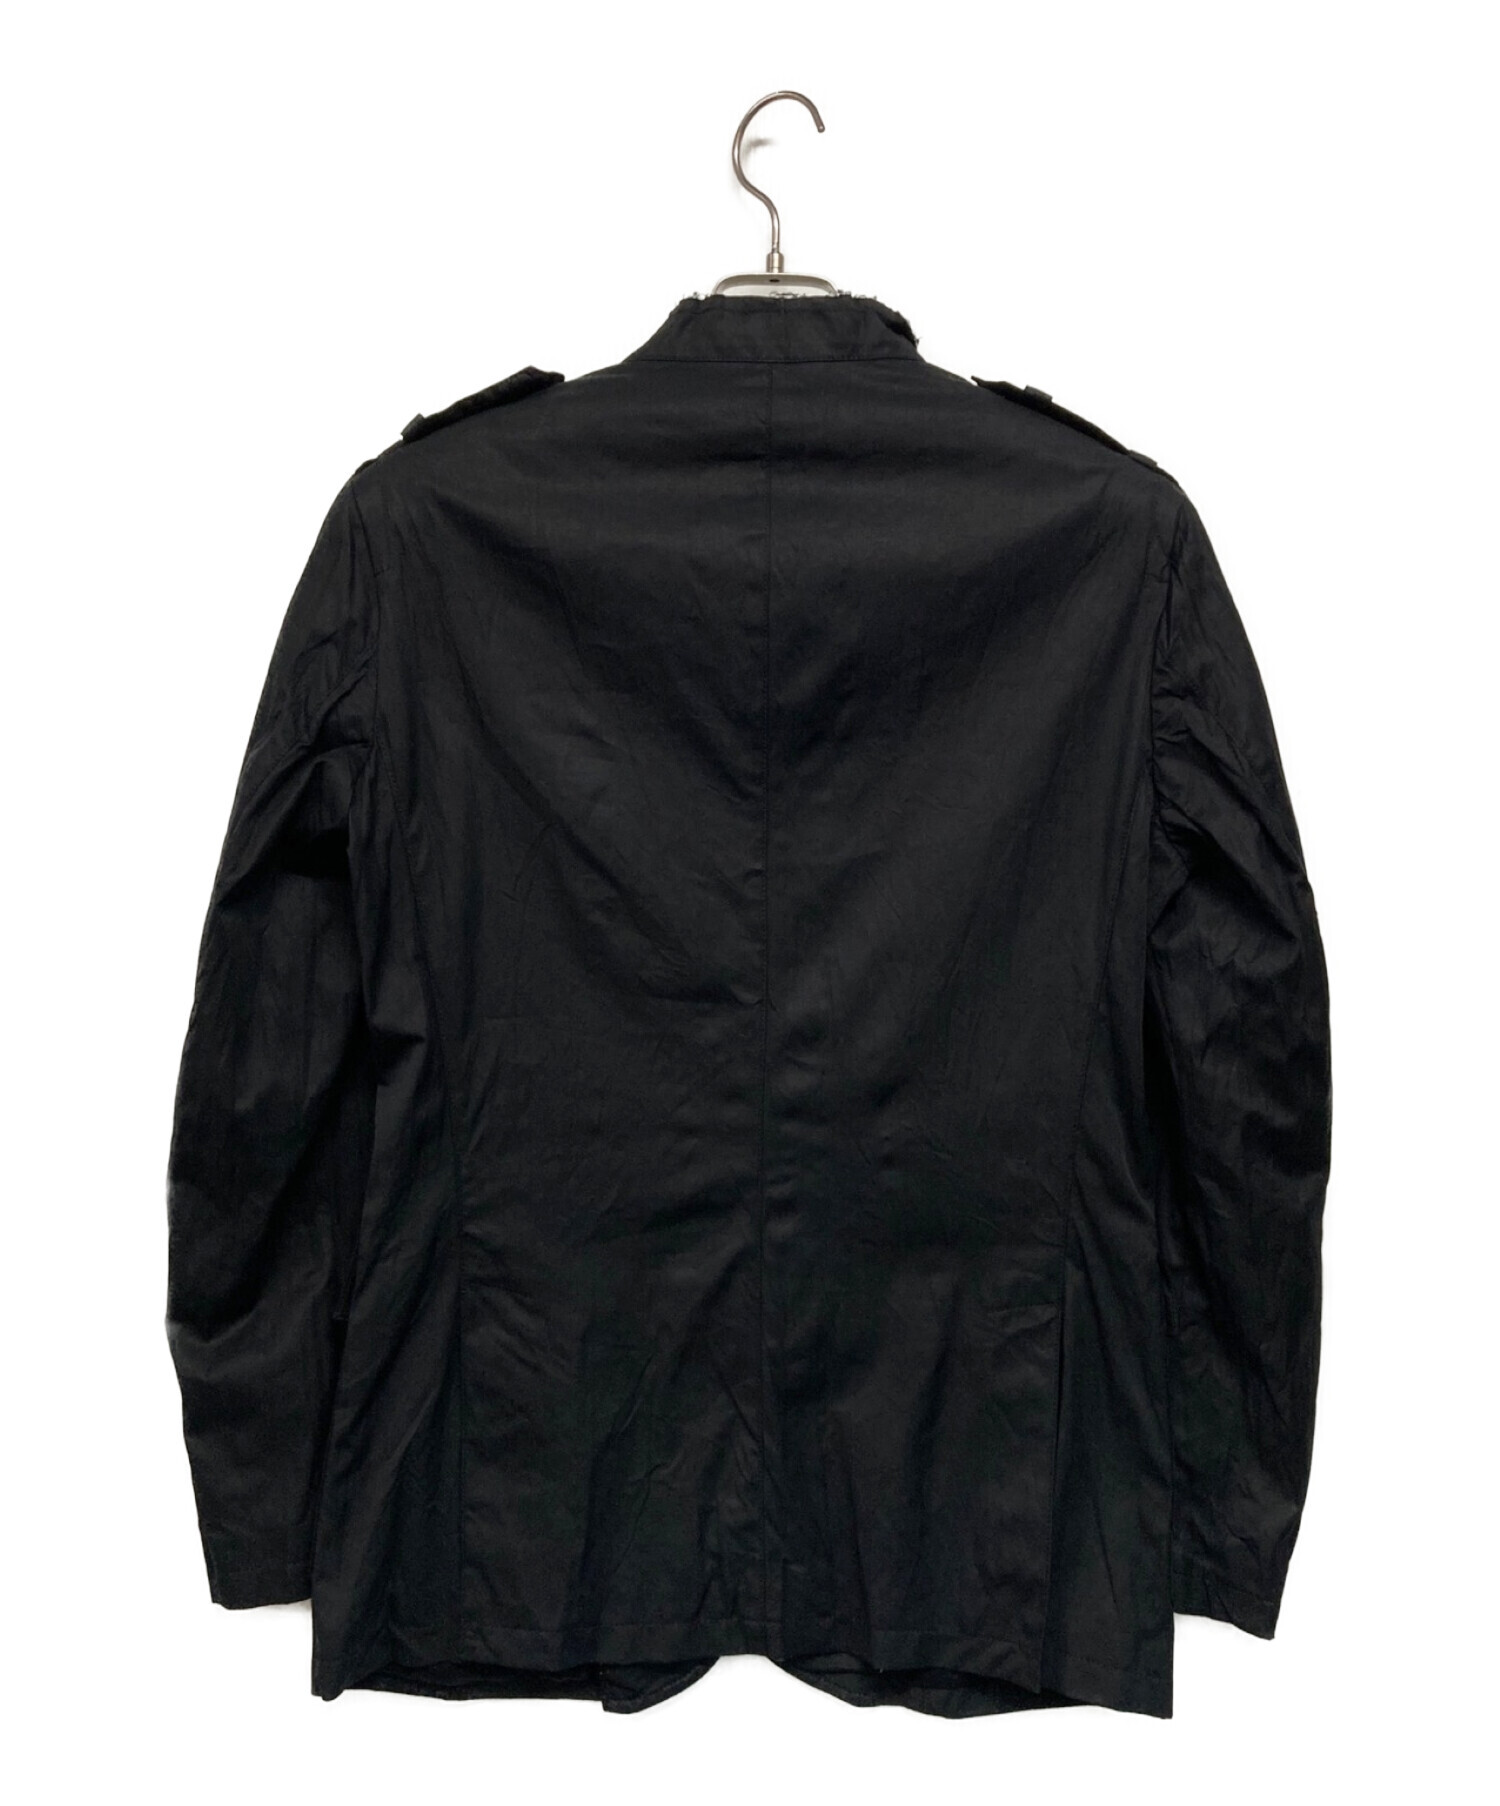 NEIL BARRETT (ニールバレット) カットオフミリタリージャケット ブラック サイズ:SIZE 44